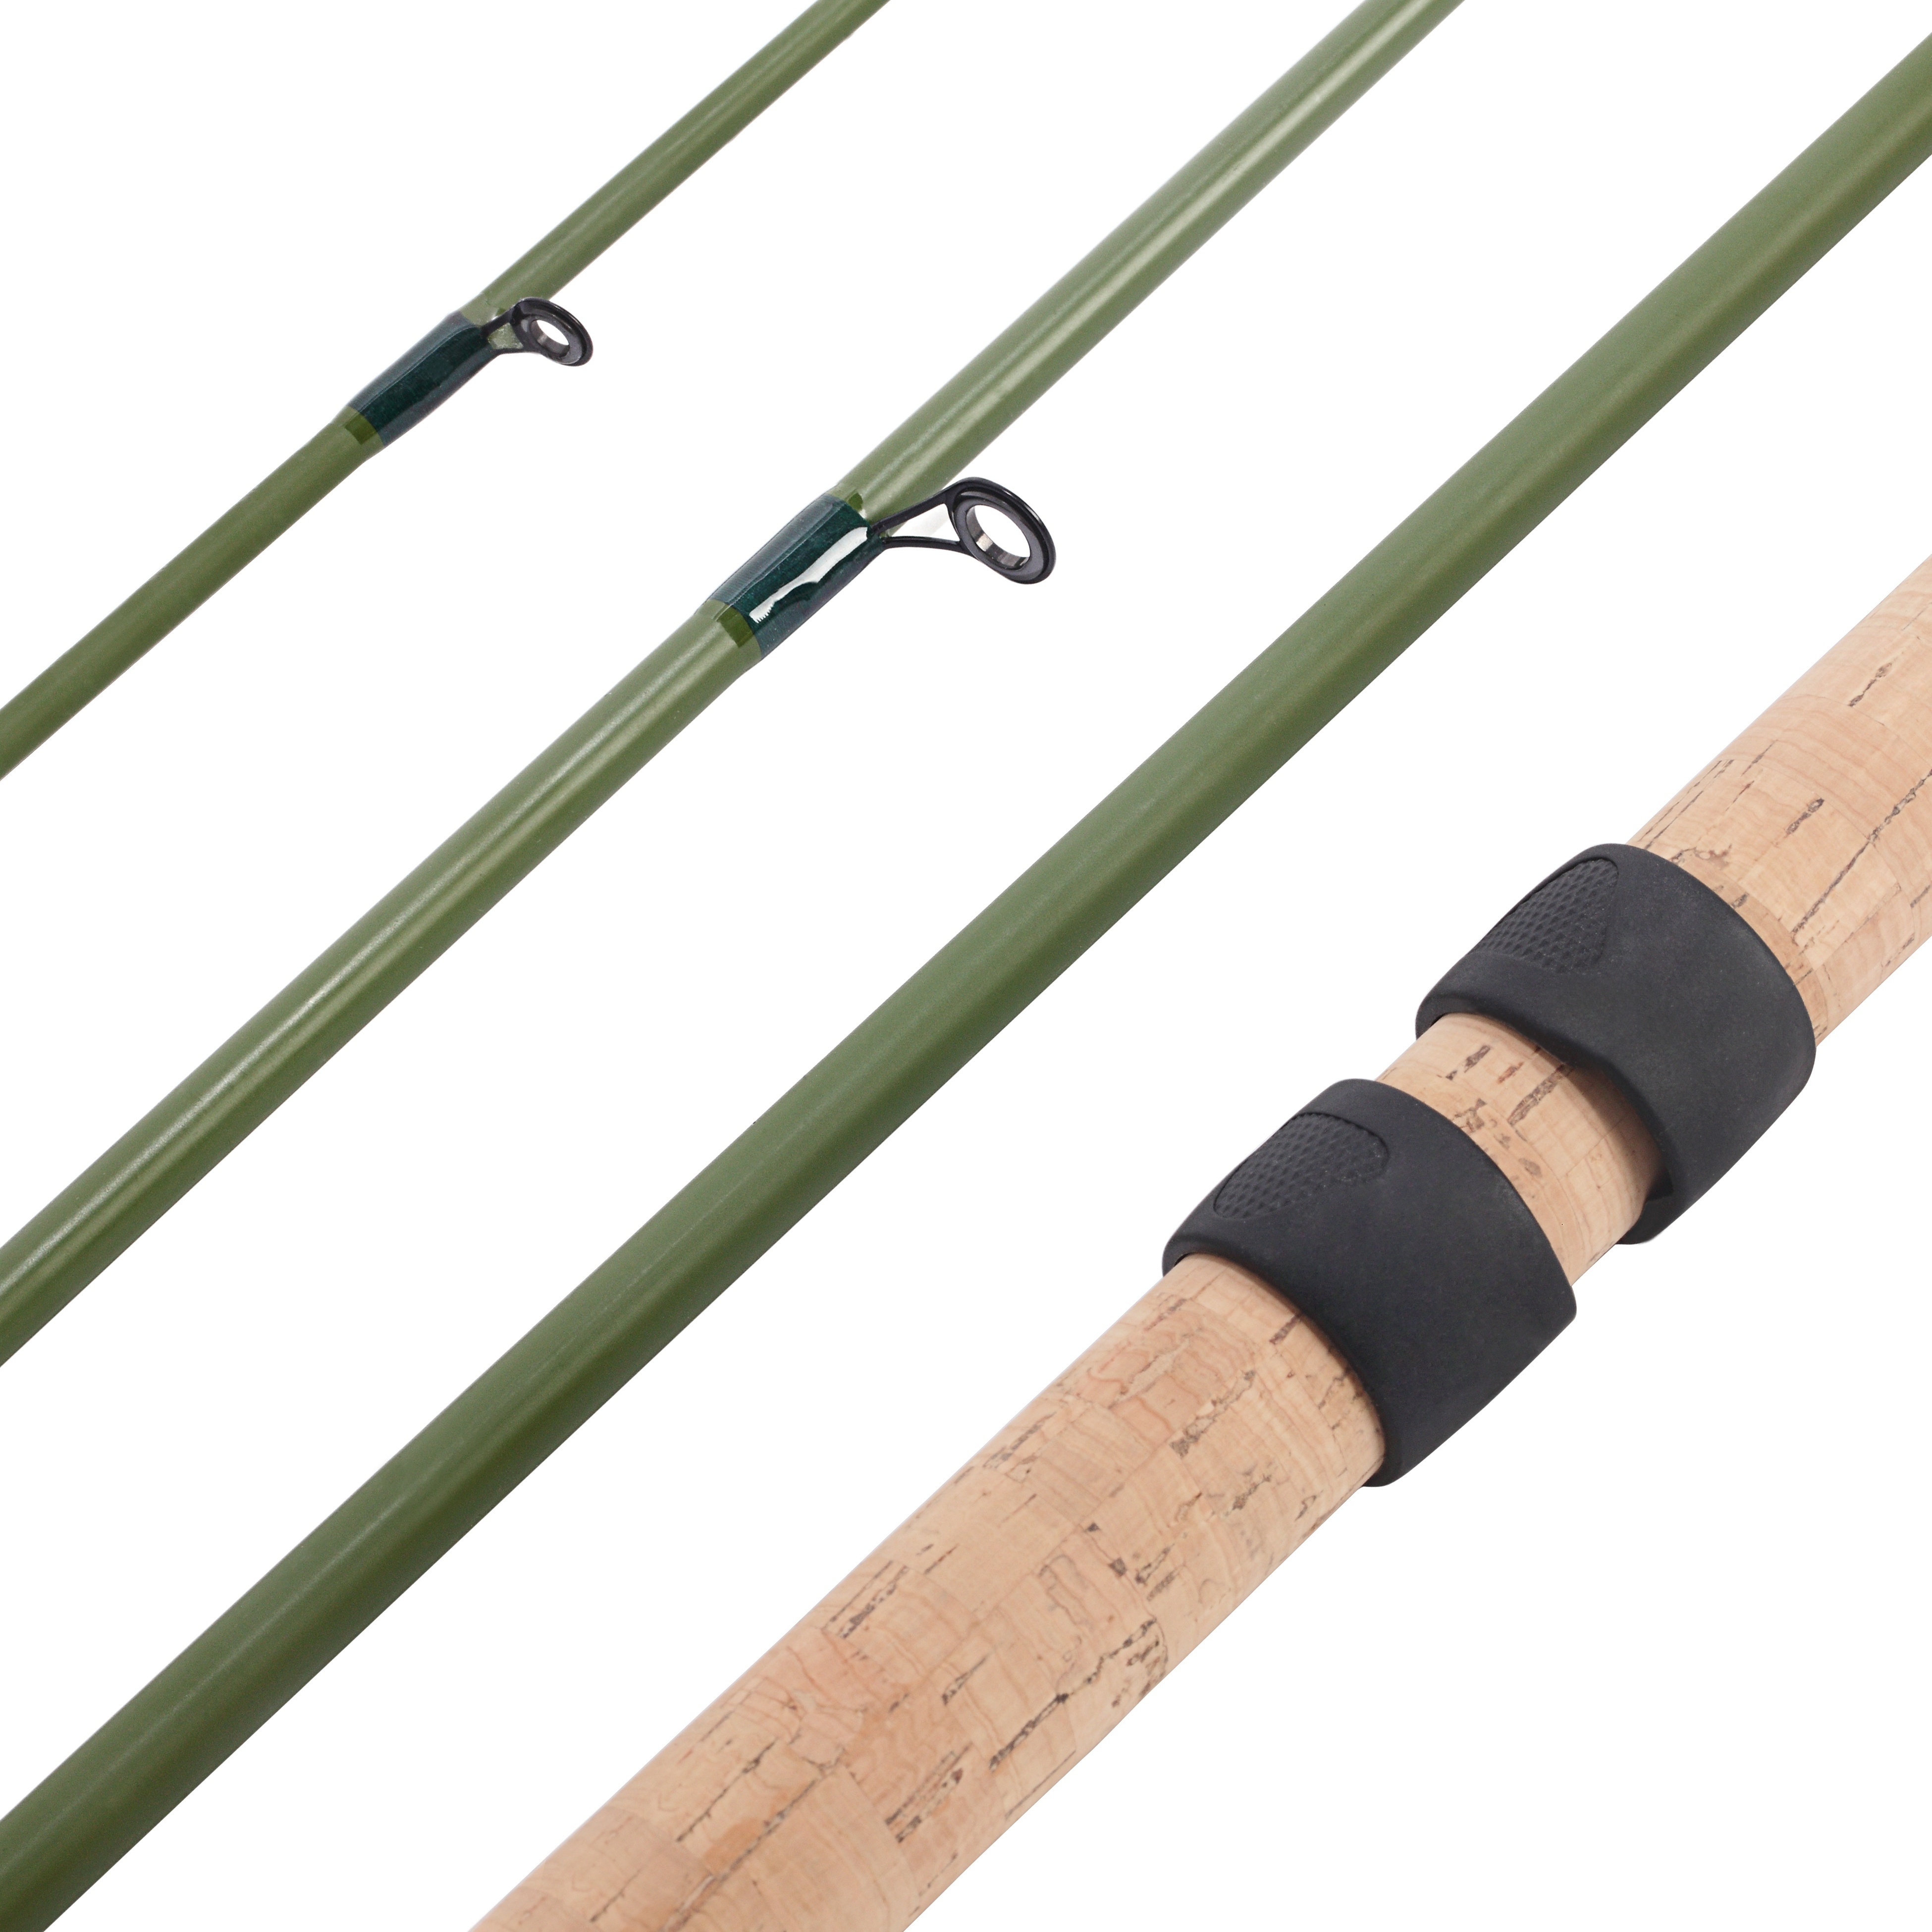 13ft/3.9m Centerpin Float Fishing Rod, 4-piece Carbon Fiber Fishing Rod  With Cork Handle, Comfortable Grip, Light Centerpin Line WT 2.72-4.54KG,  For S